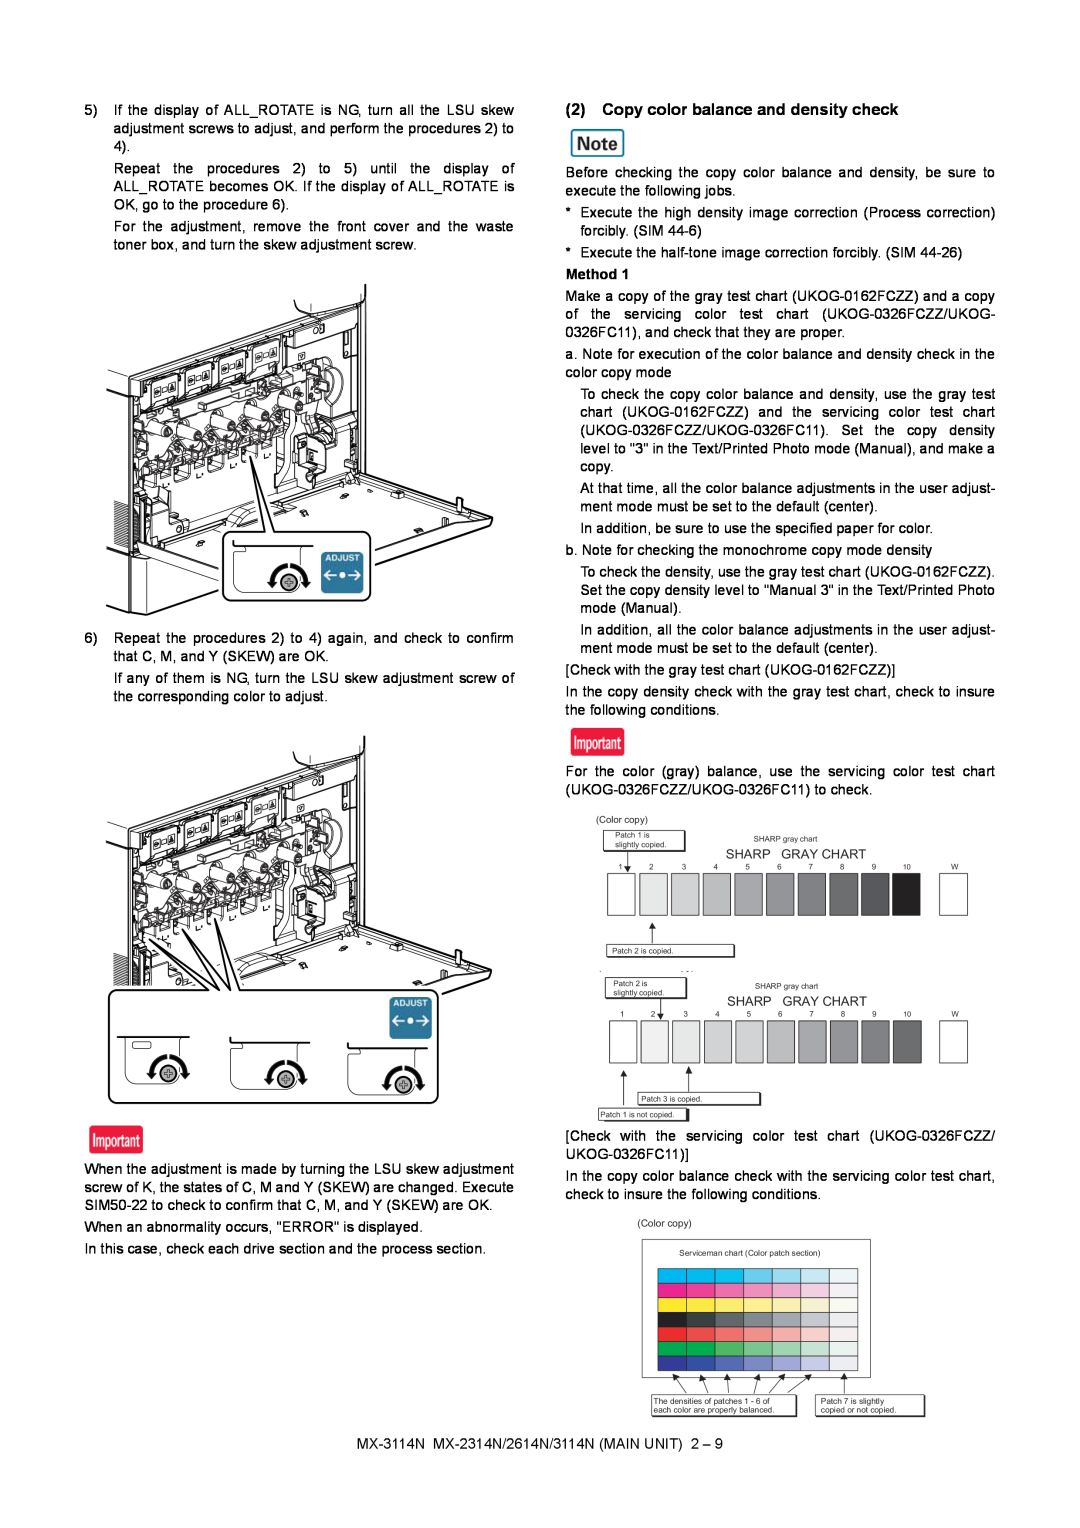 Sharp MX-3114N, MX-2614N, MX-2314N installation manual Copy color balance and density check, Method 